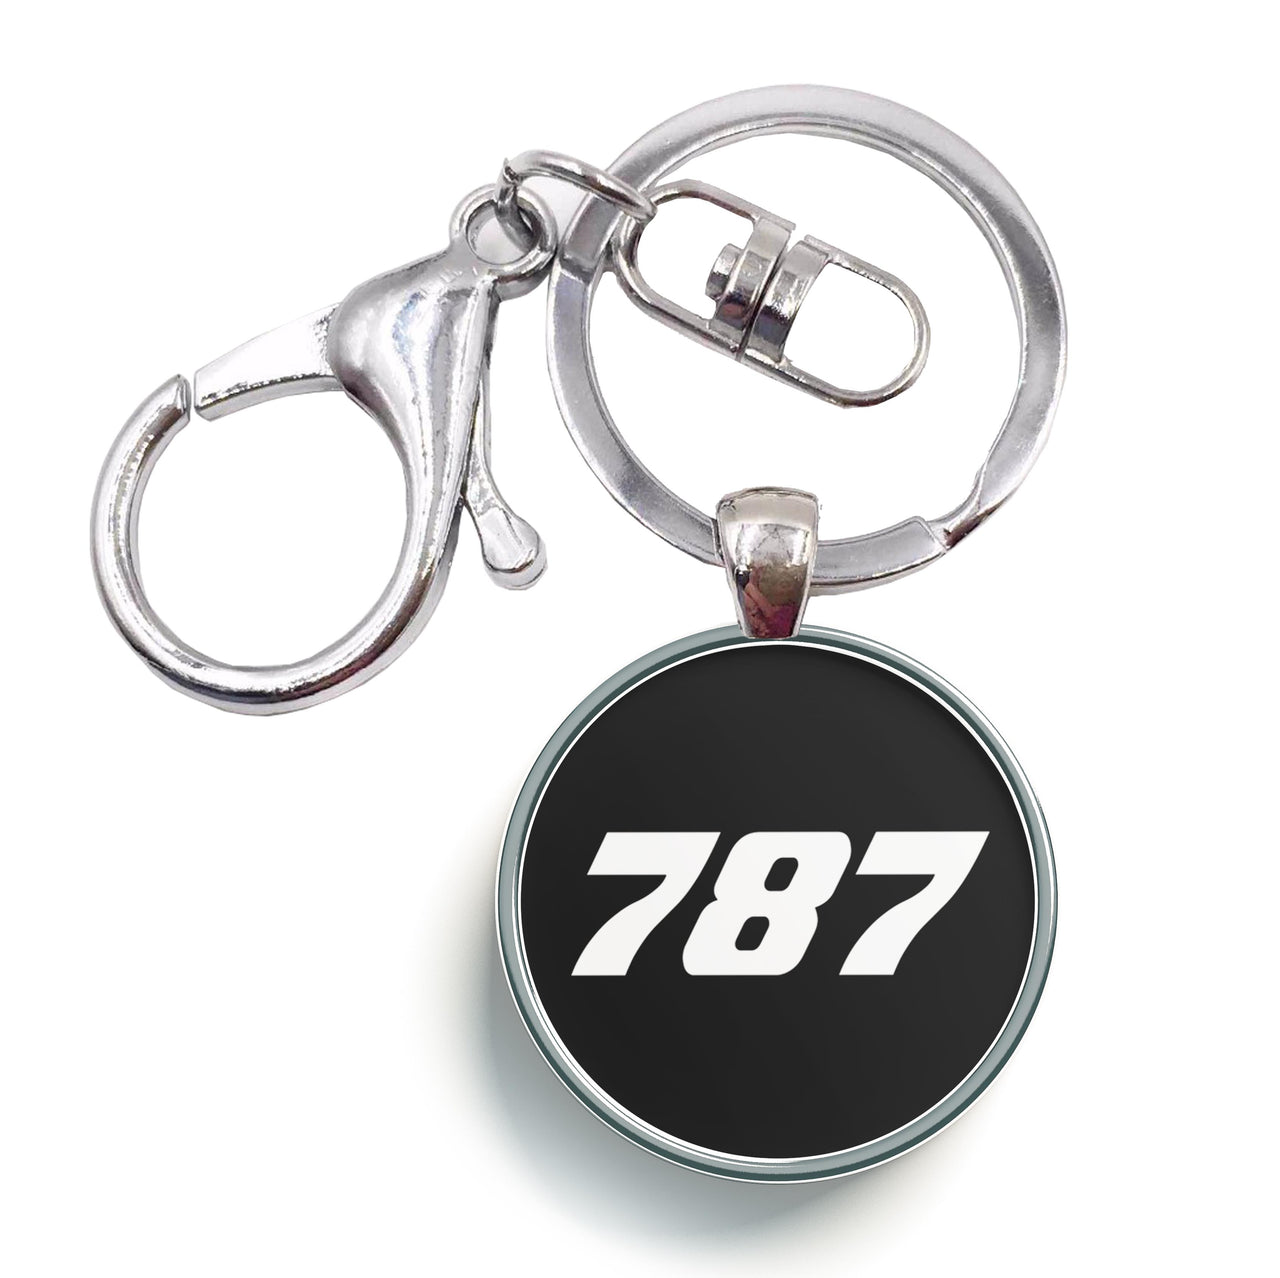 787 Flat Text Designed Circle Key Chains